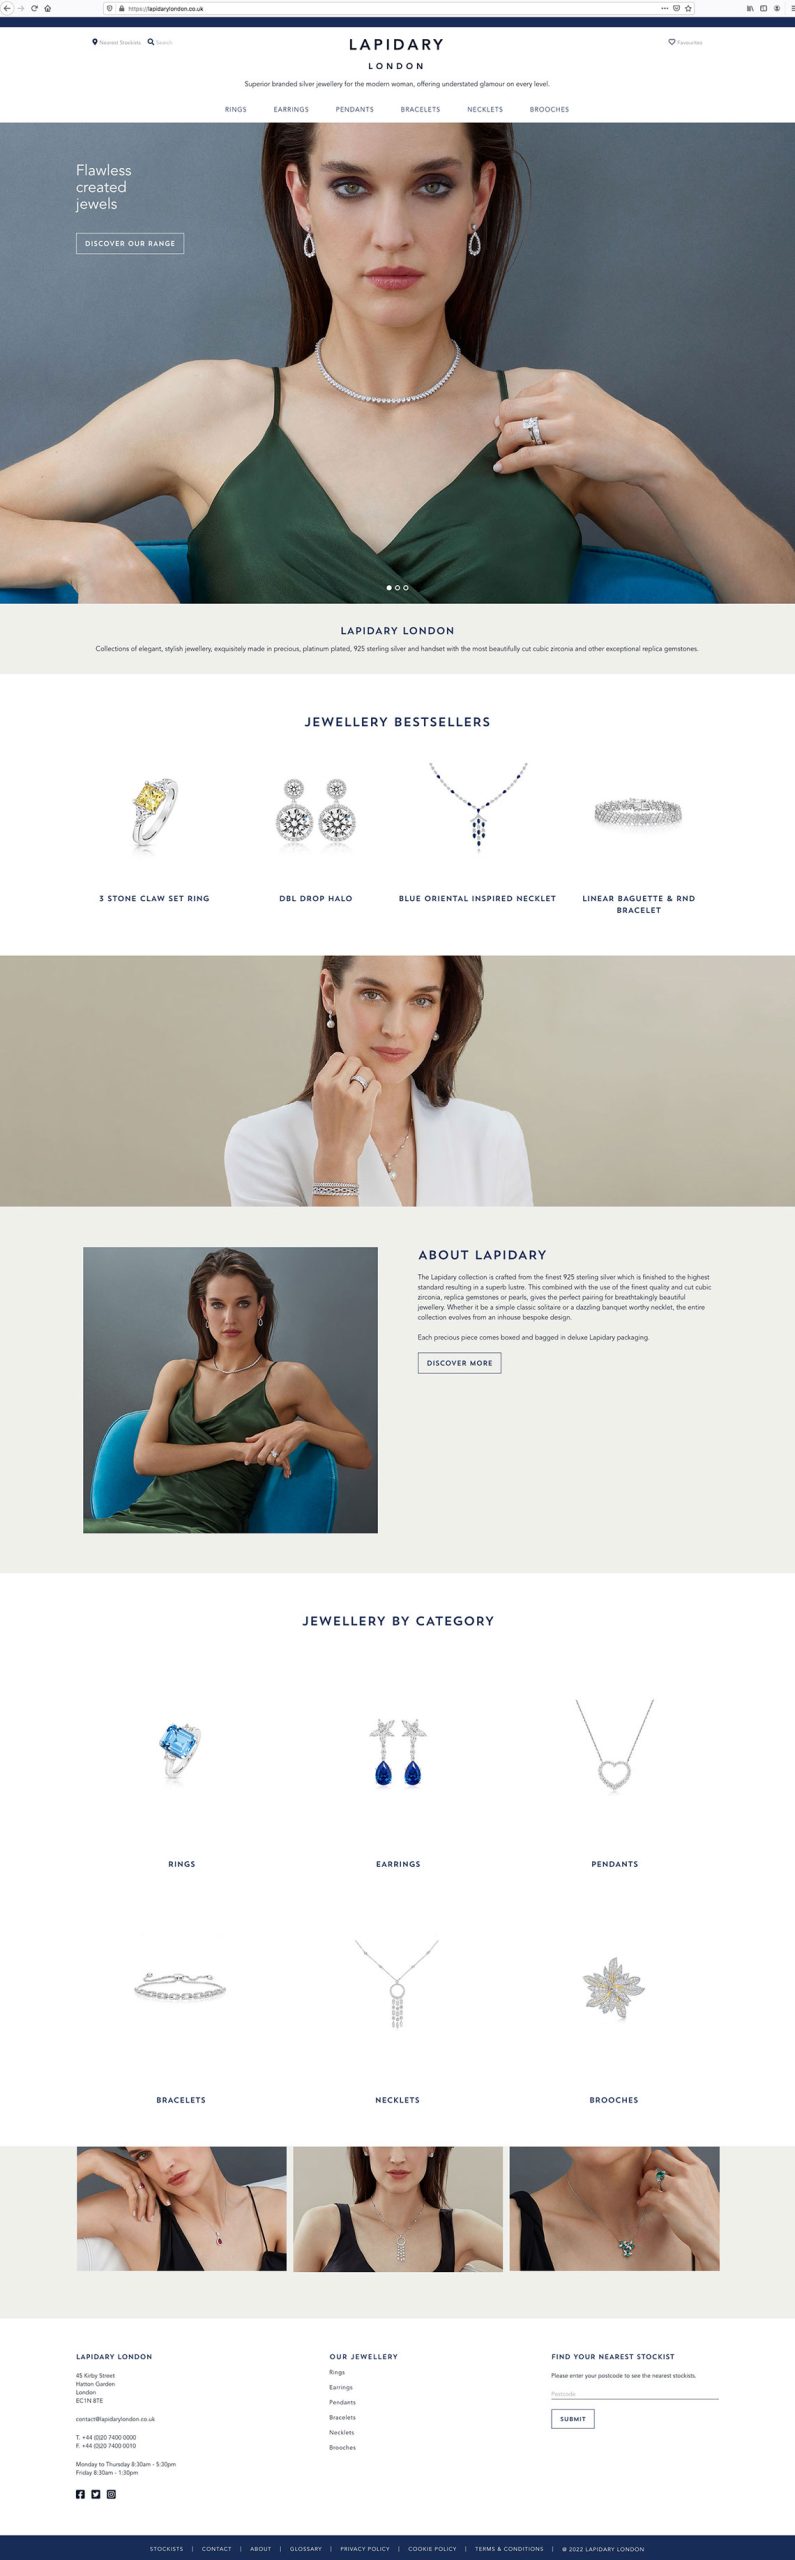 Lapidary London website